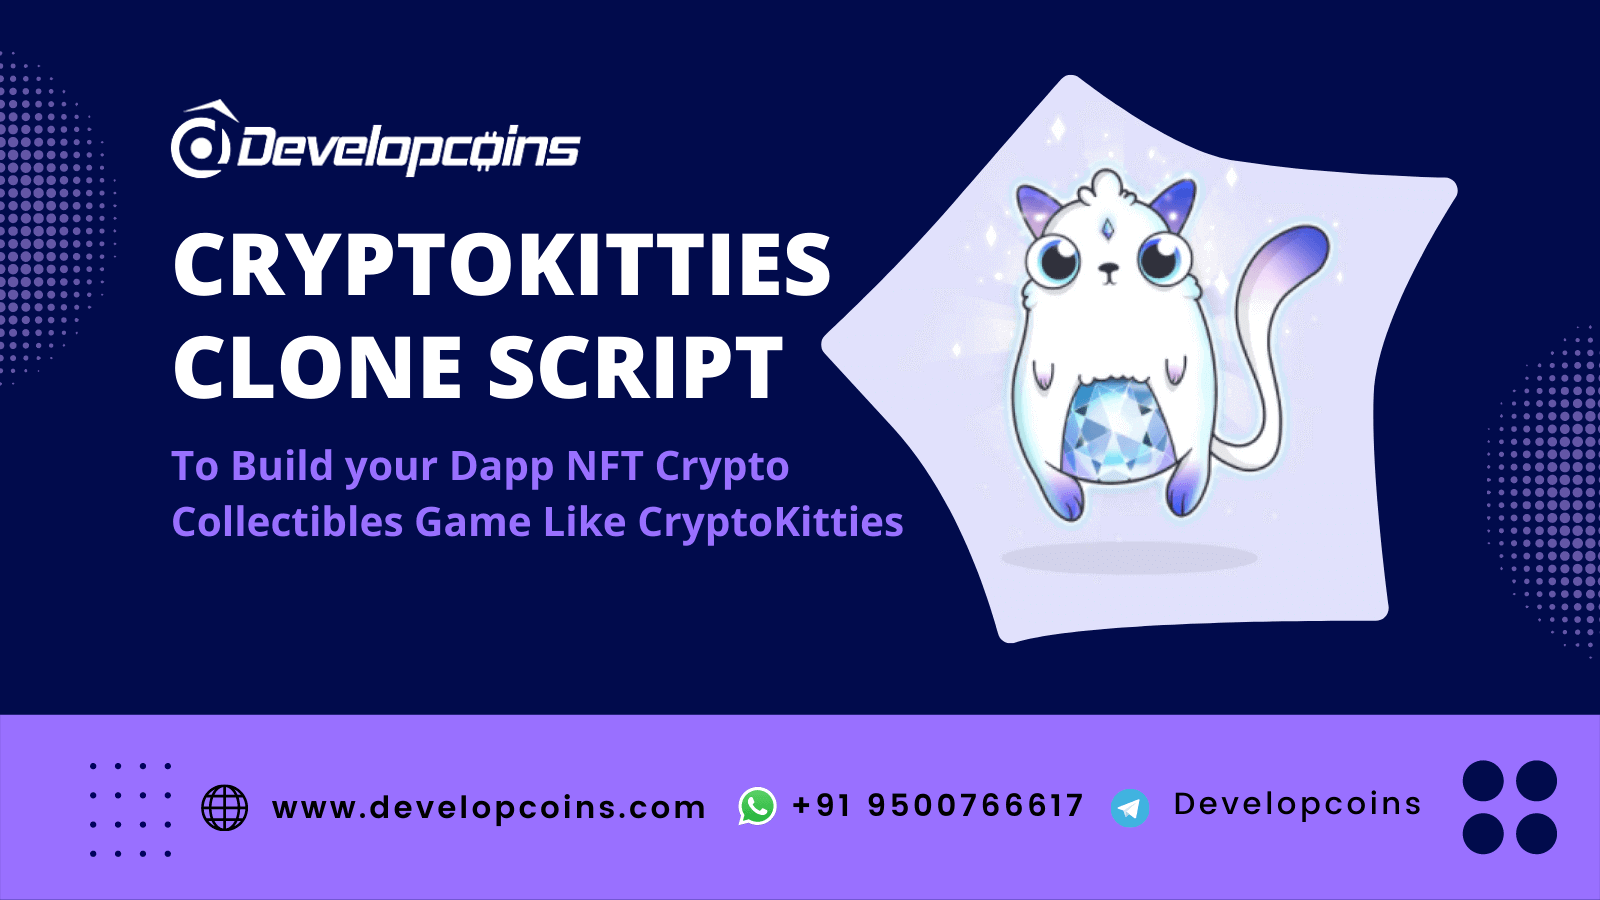 CryptoKitties Clone Script - To Build Your DApp Based NFT Game On Ethereum Blockchain